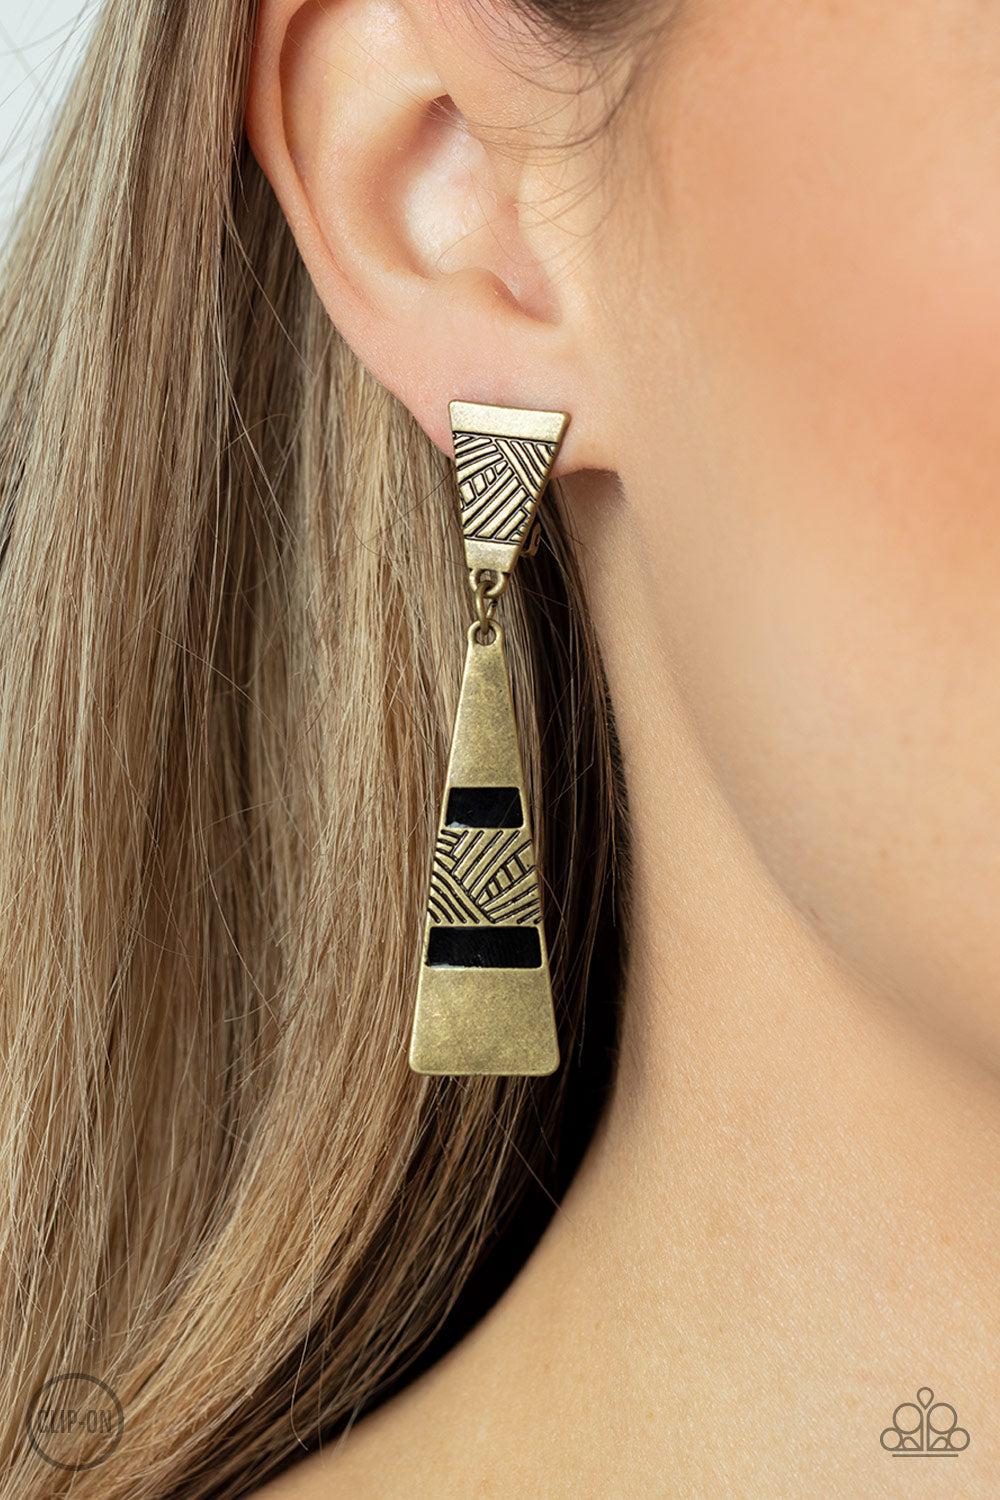 Safari Seeker Brass Clip-on Earrings - Paparazzi Accessories-on model - CarasShop.com - $5 Jewelry by Cara Jewels